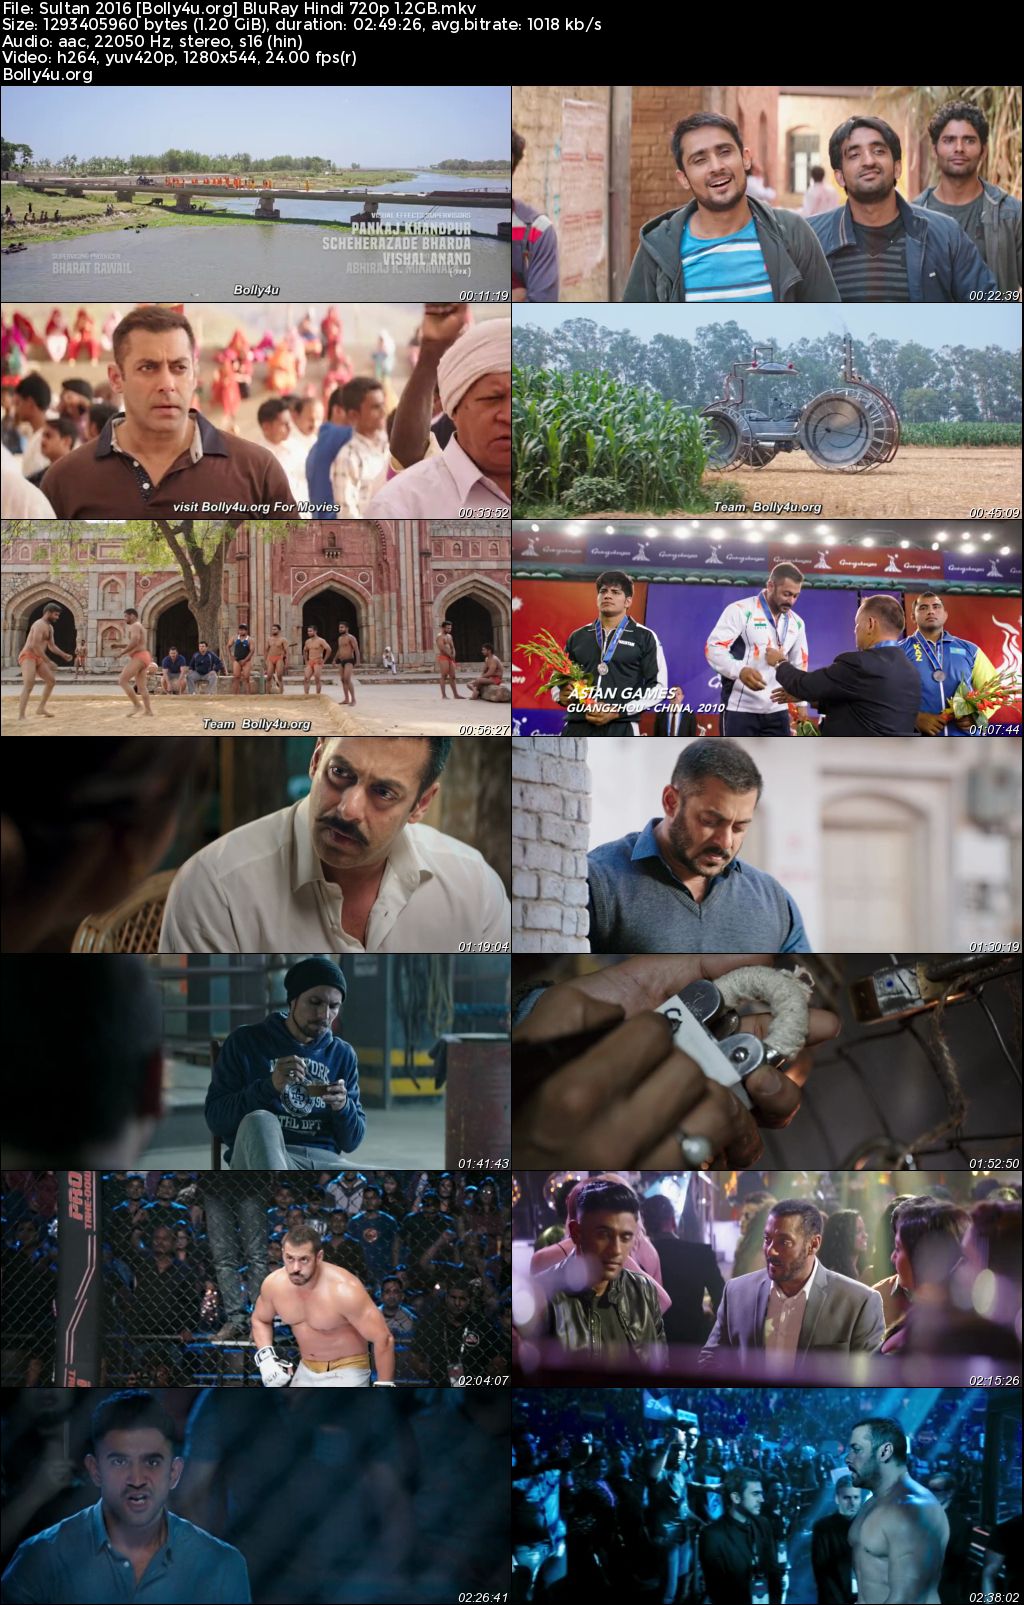 Sultan 2016 BluRay Hindi Full Movie Download 1080p 720p 480p